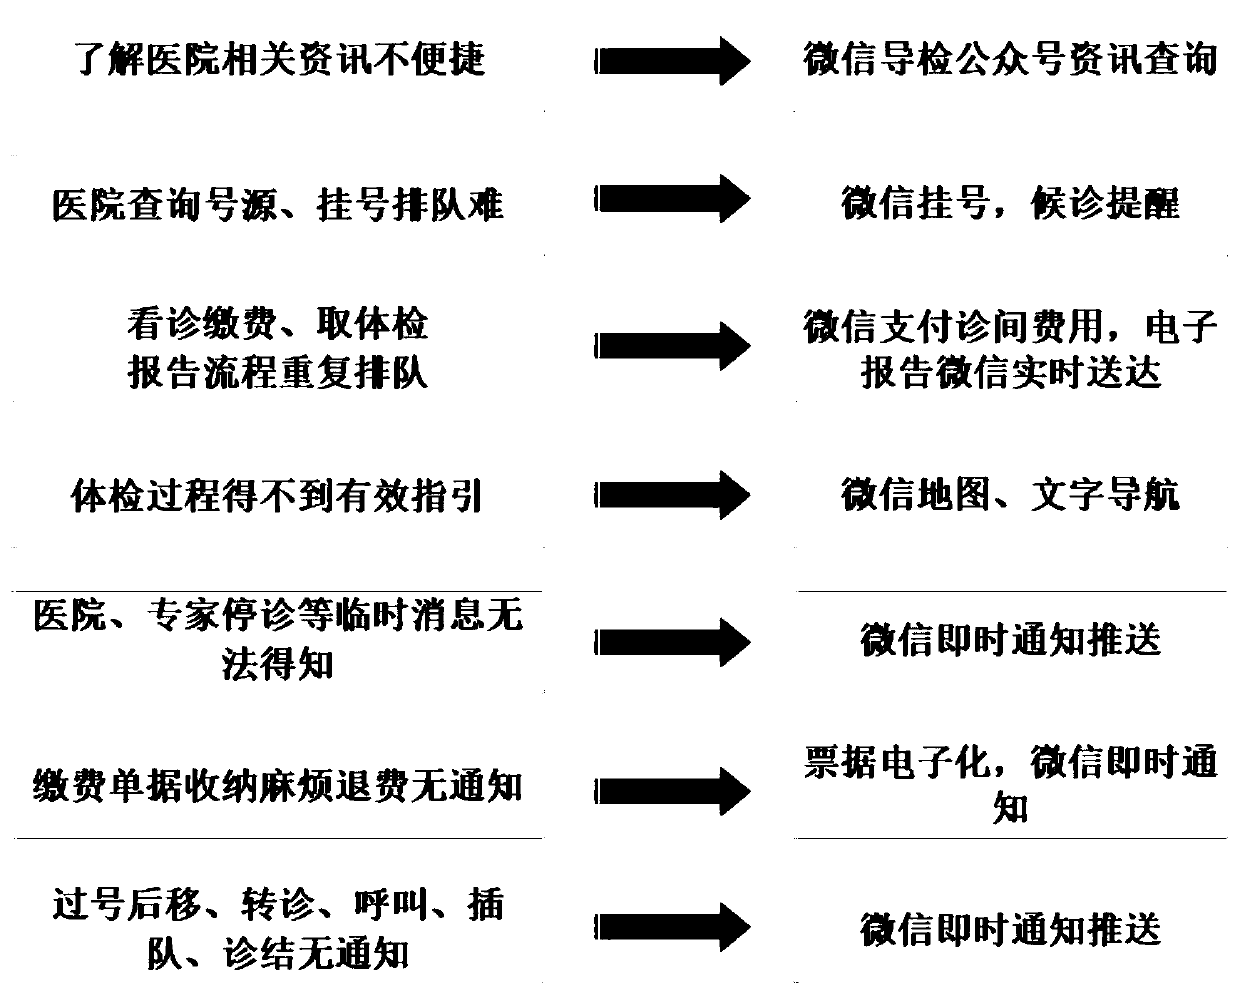 Method for intelligent examination guidance through WeChat